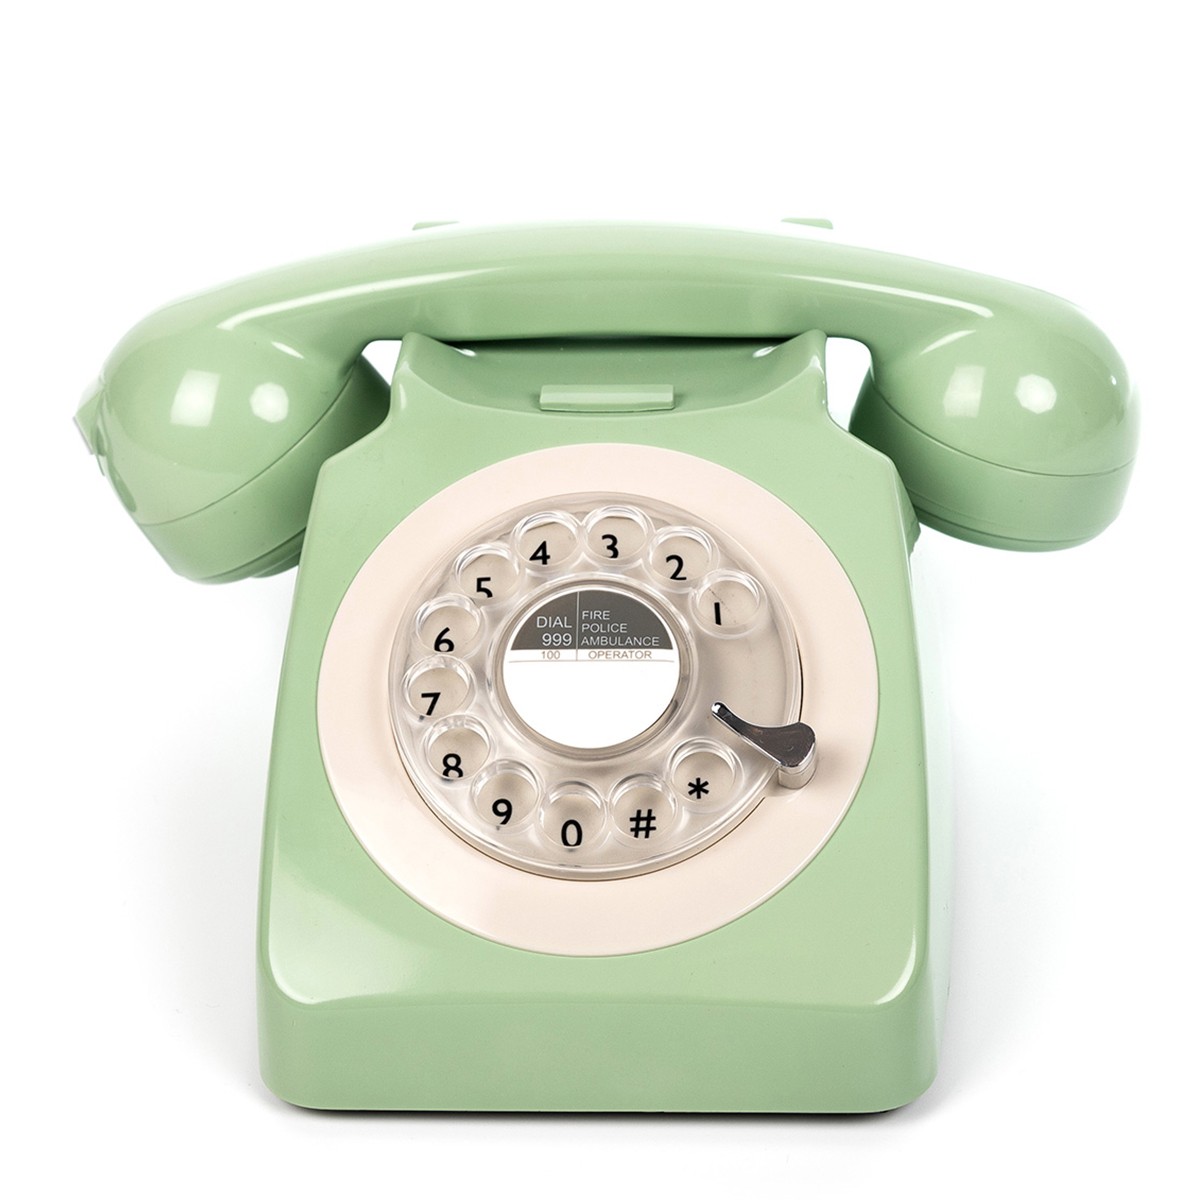 Старый стационарный телефон. Дисковый ретро телефон GPO 746 Rotary. GPO 746 Rotary Mint Green. Домашний телефон. Телефонный аппарат с дисковым номеронабирателем.